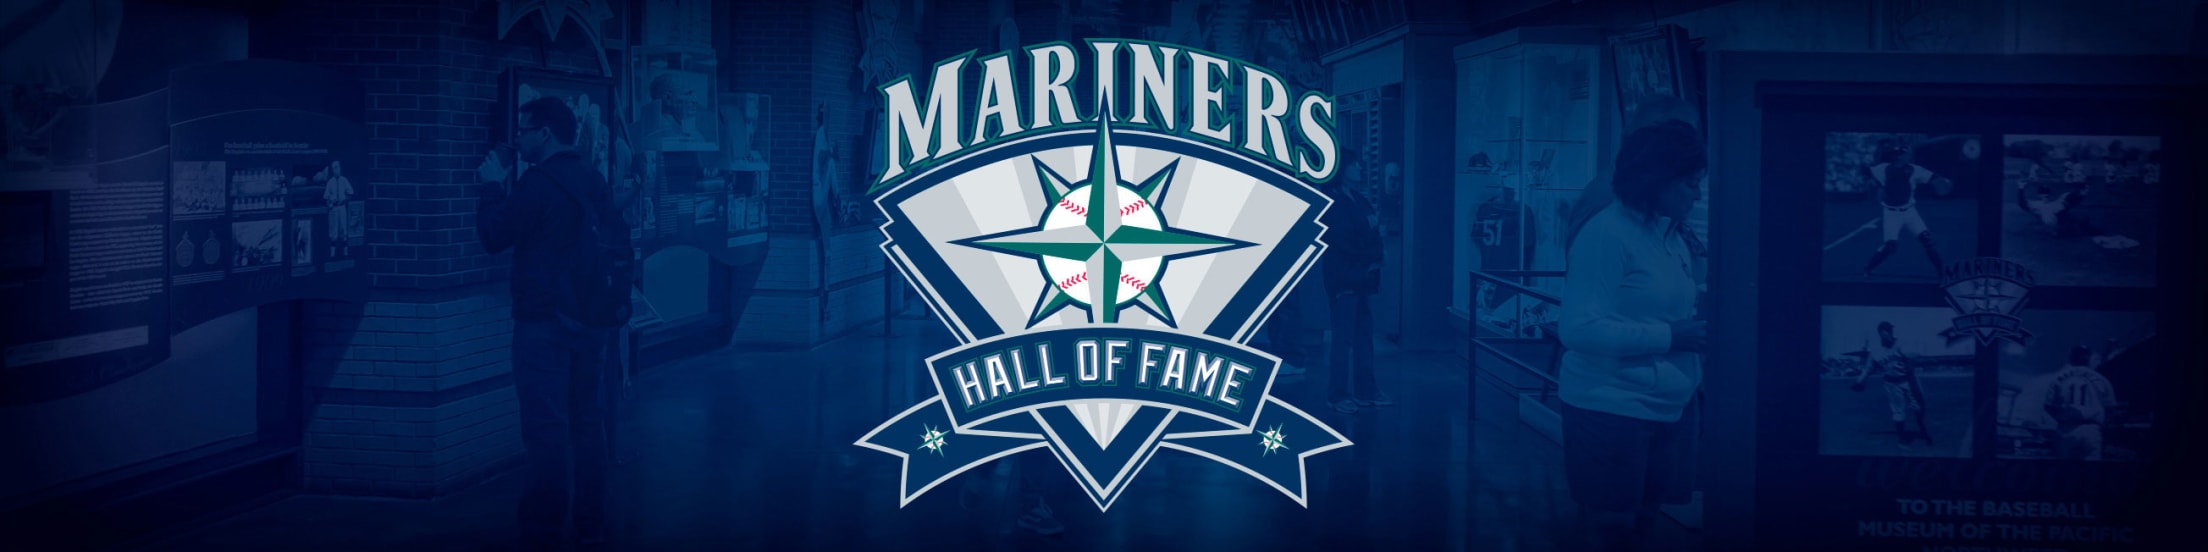 Randy Johnson - Mariners Hall of Fame